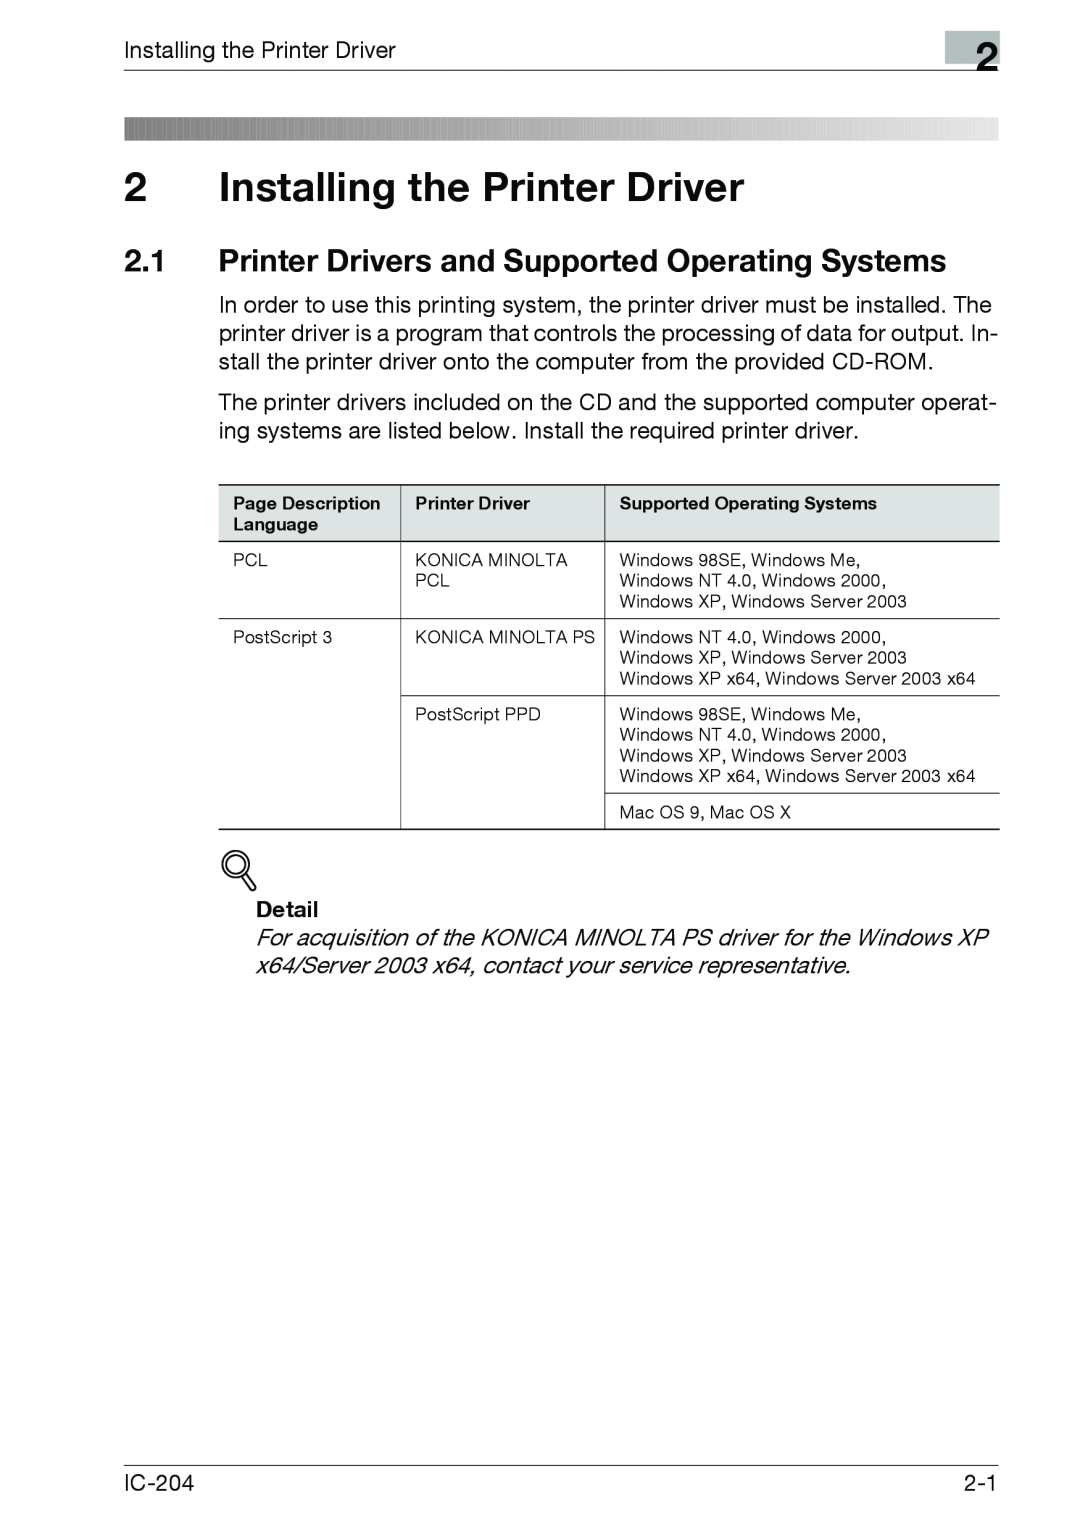 Konica Minolta IC-204 manual Installing the Printer Driver, Detail 